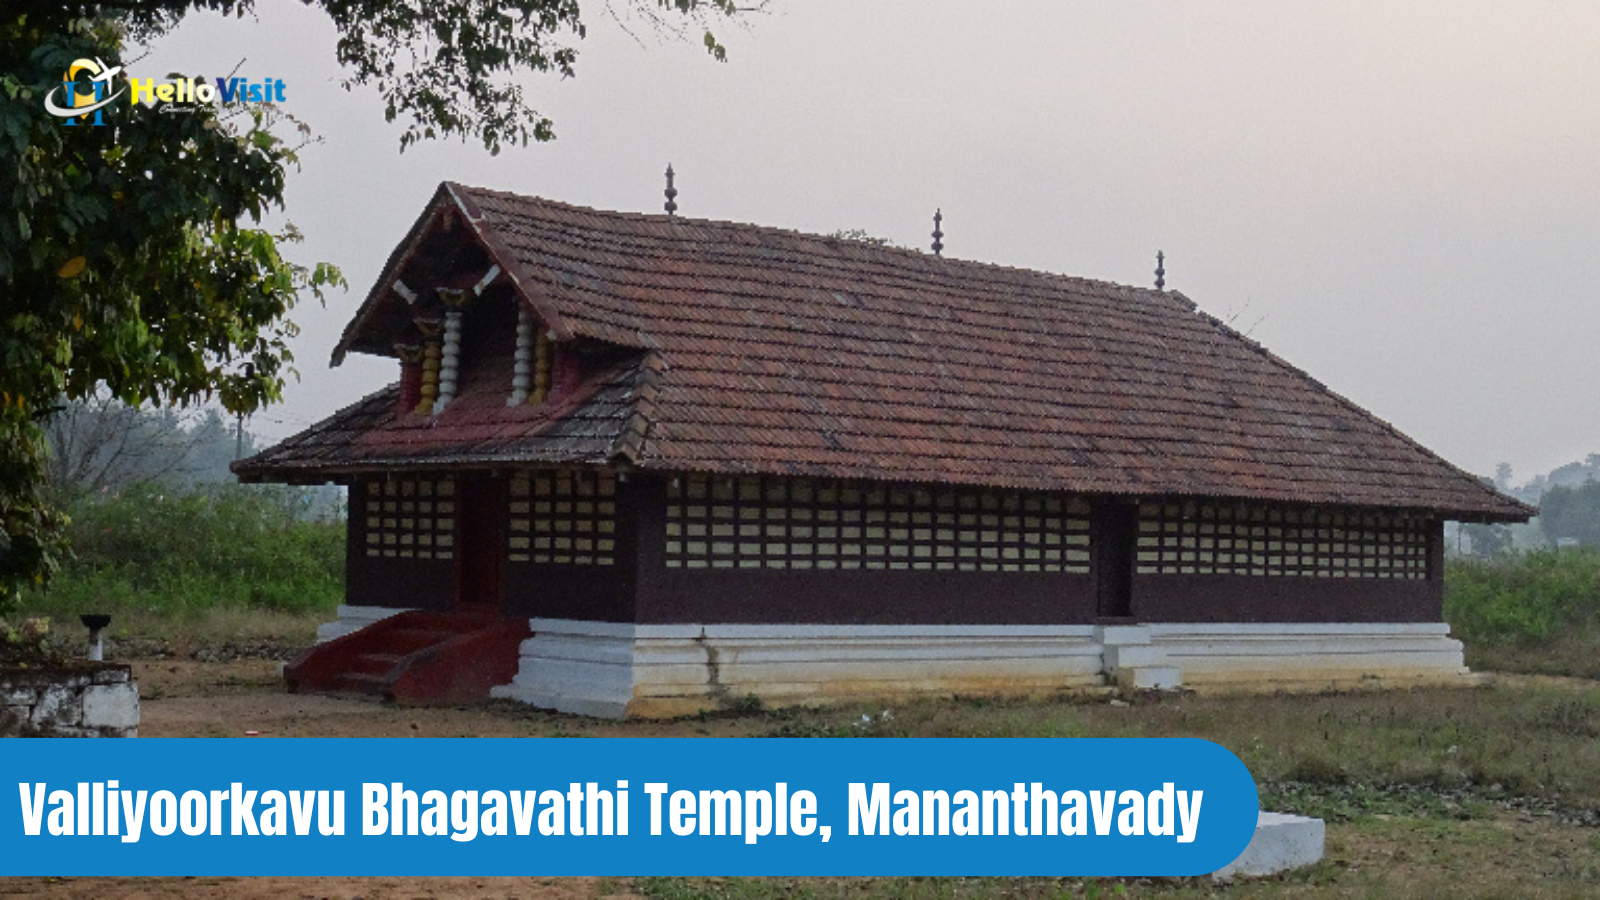 Valliyoorkavu Bhagavathi Temple, Mananthavady